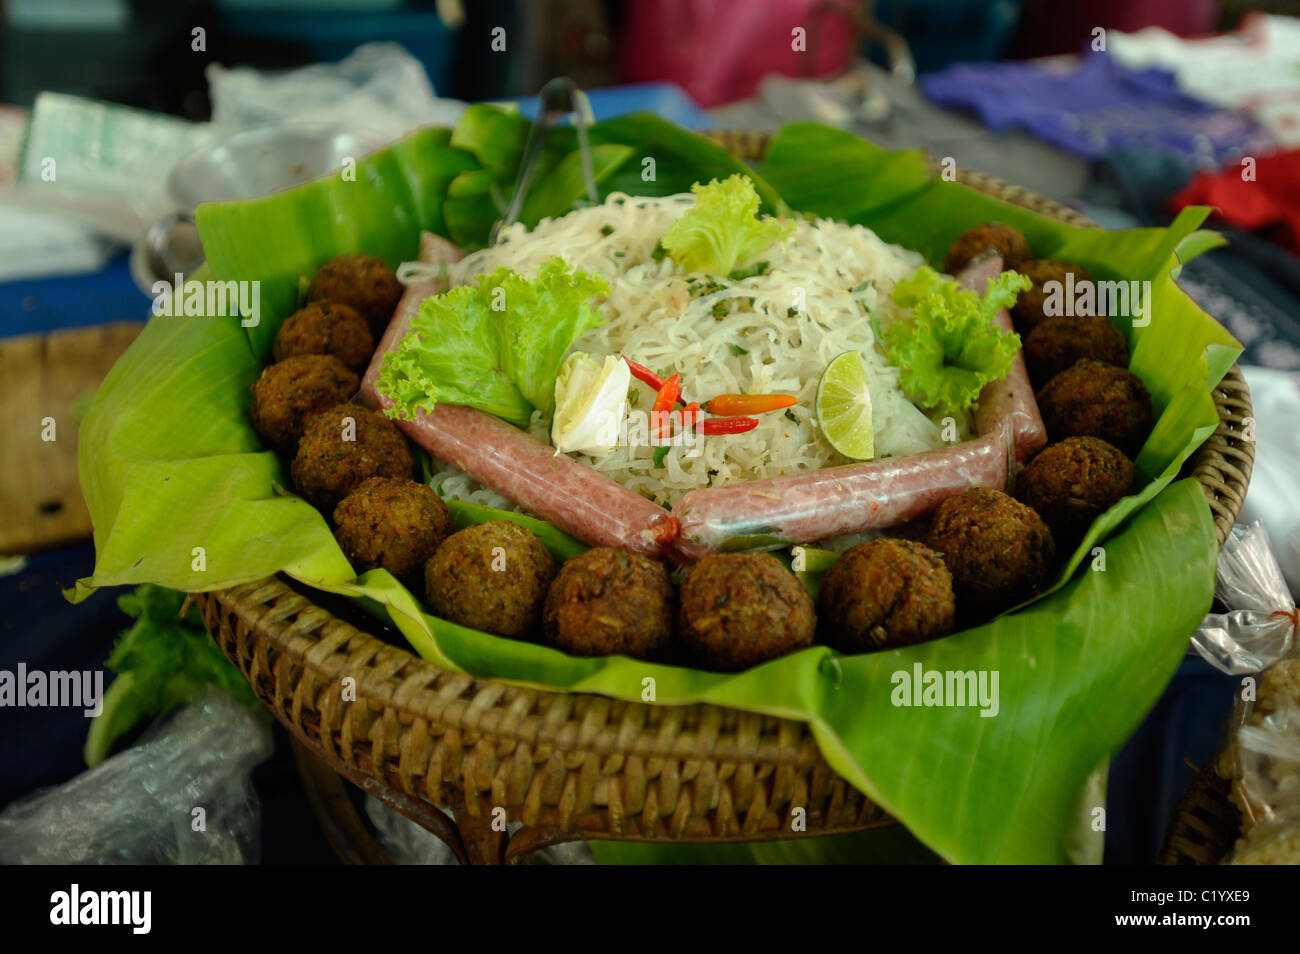 Yam Nam ( salade de porc aigre), food court , Bangkok, Thaïlande Banque D'Images